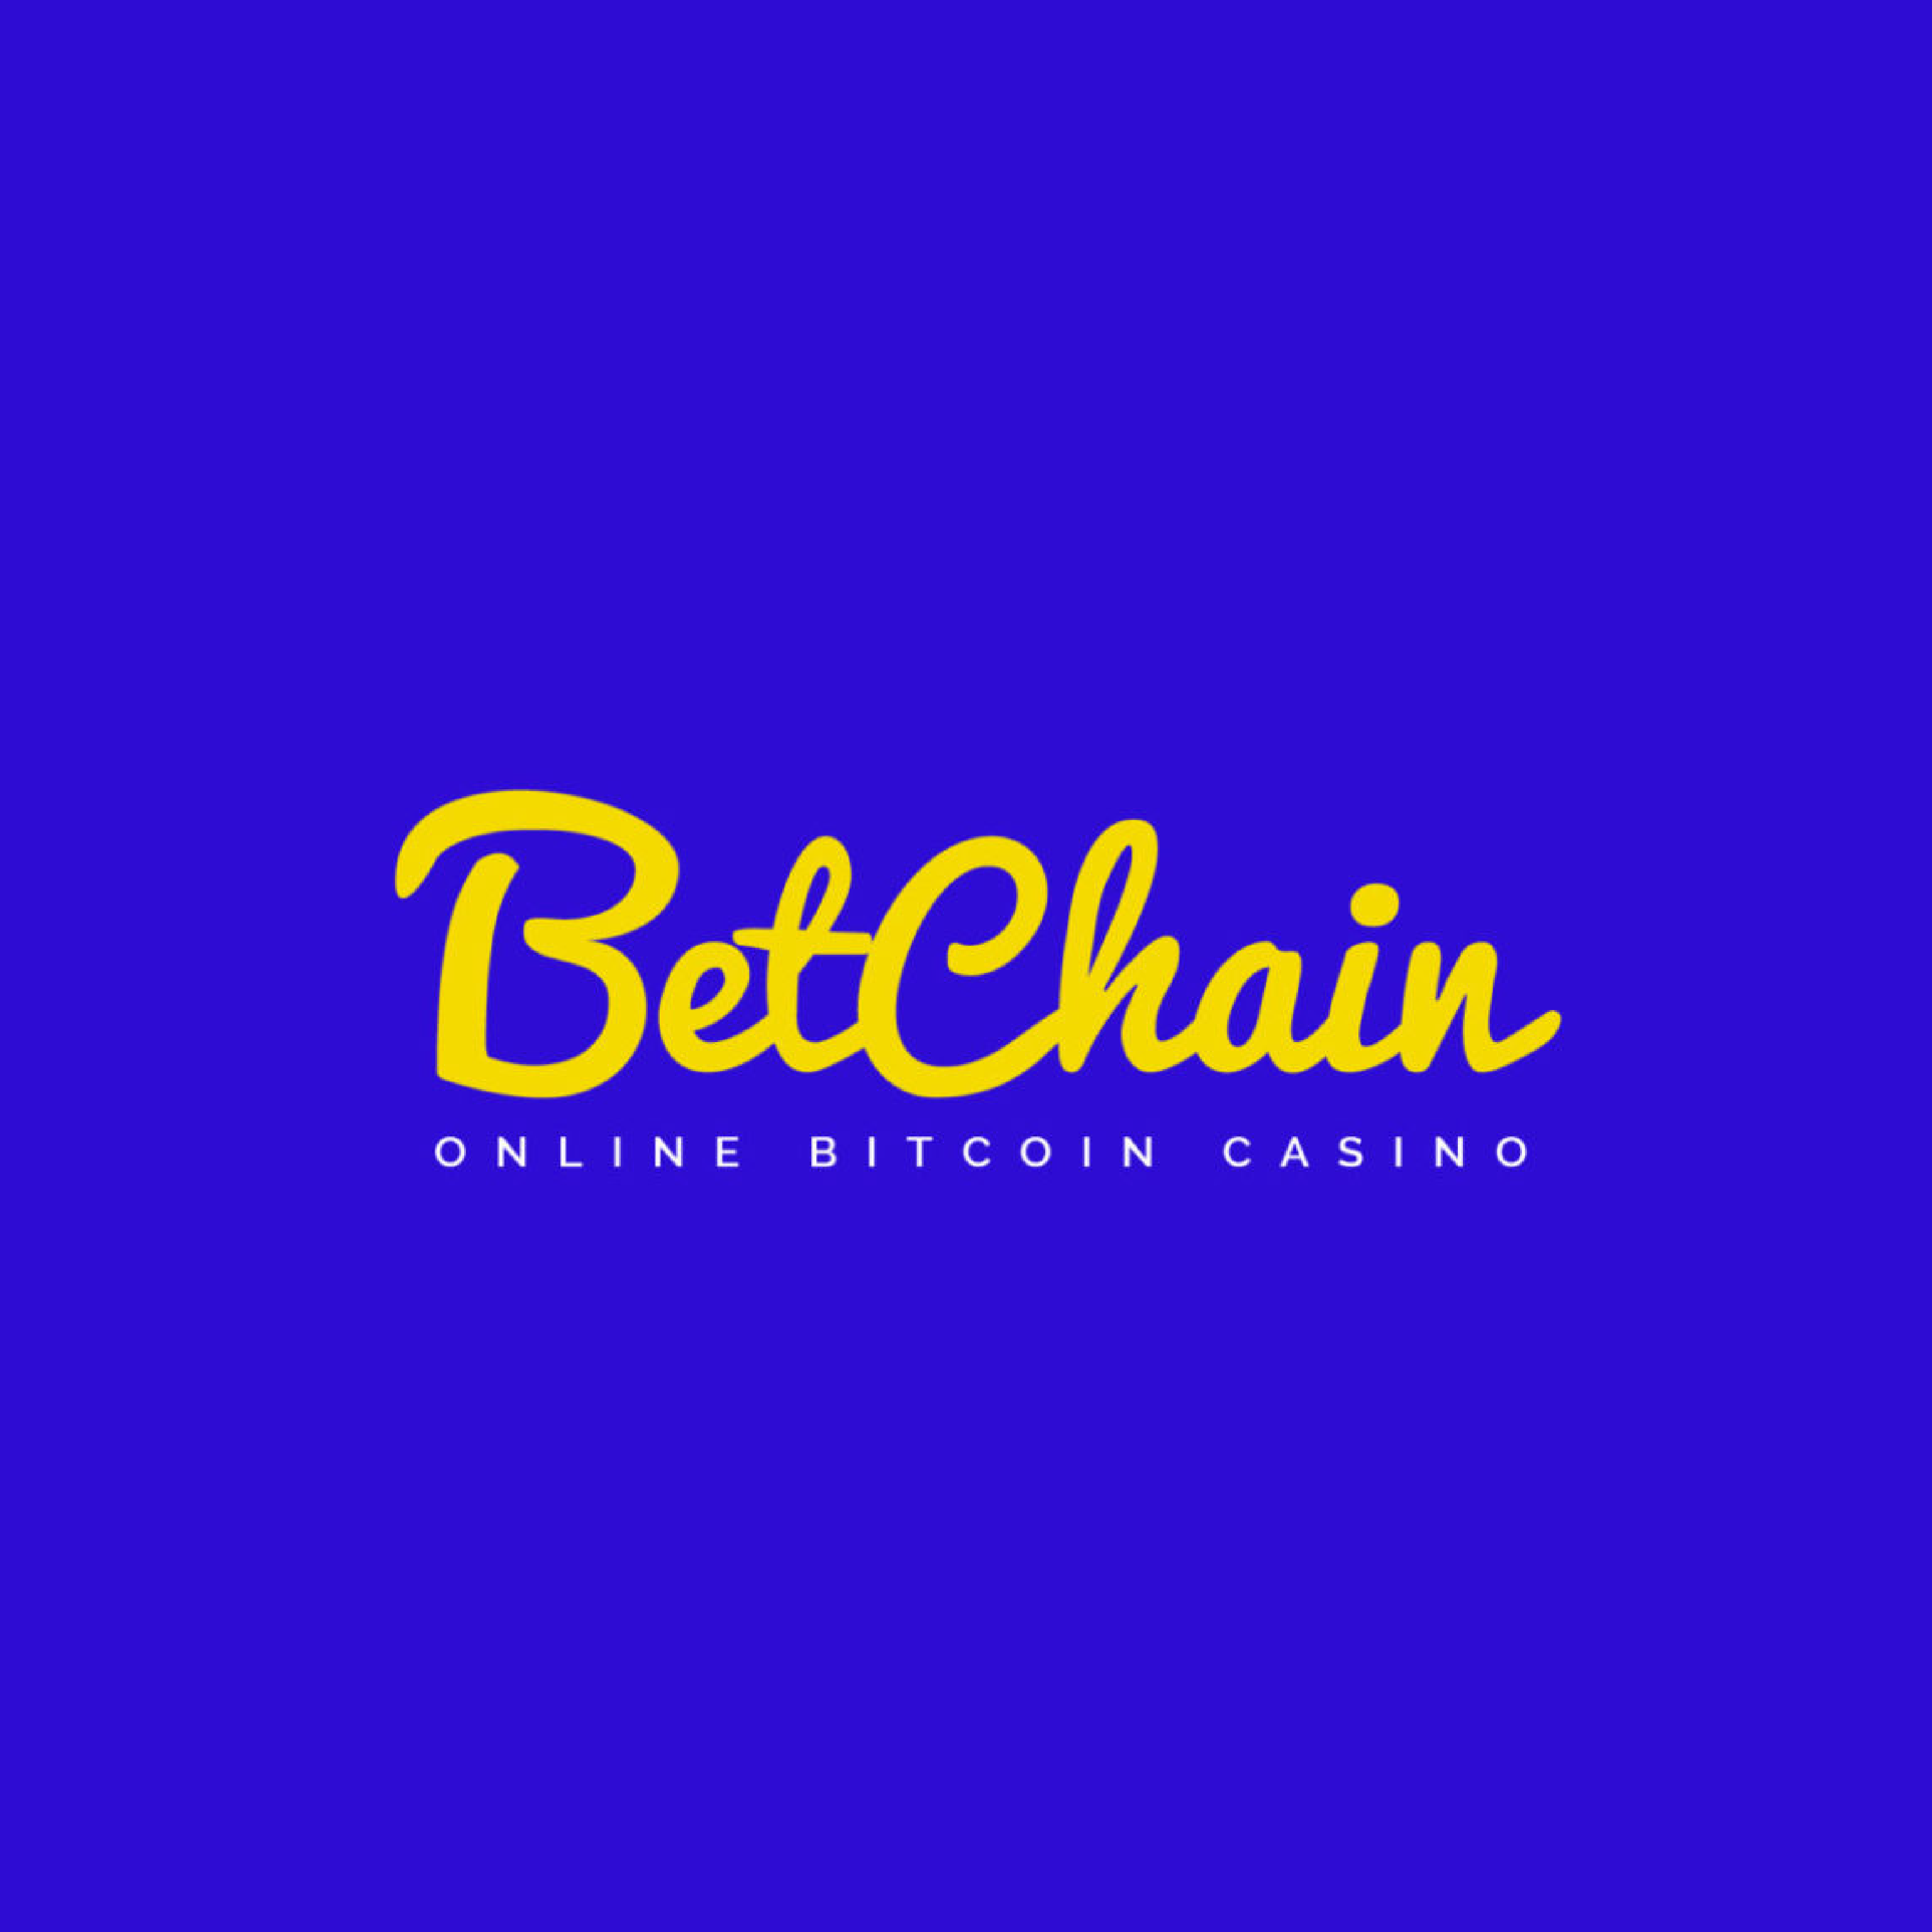 Online games free casino